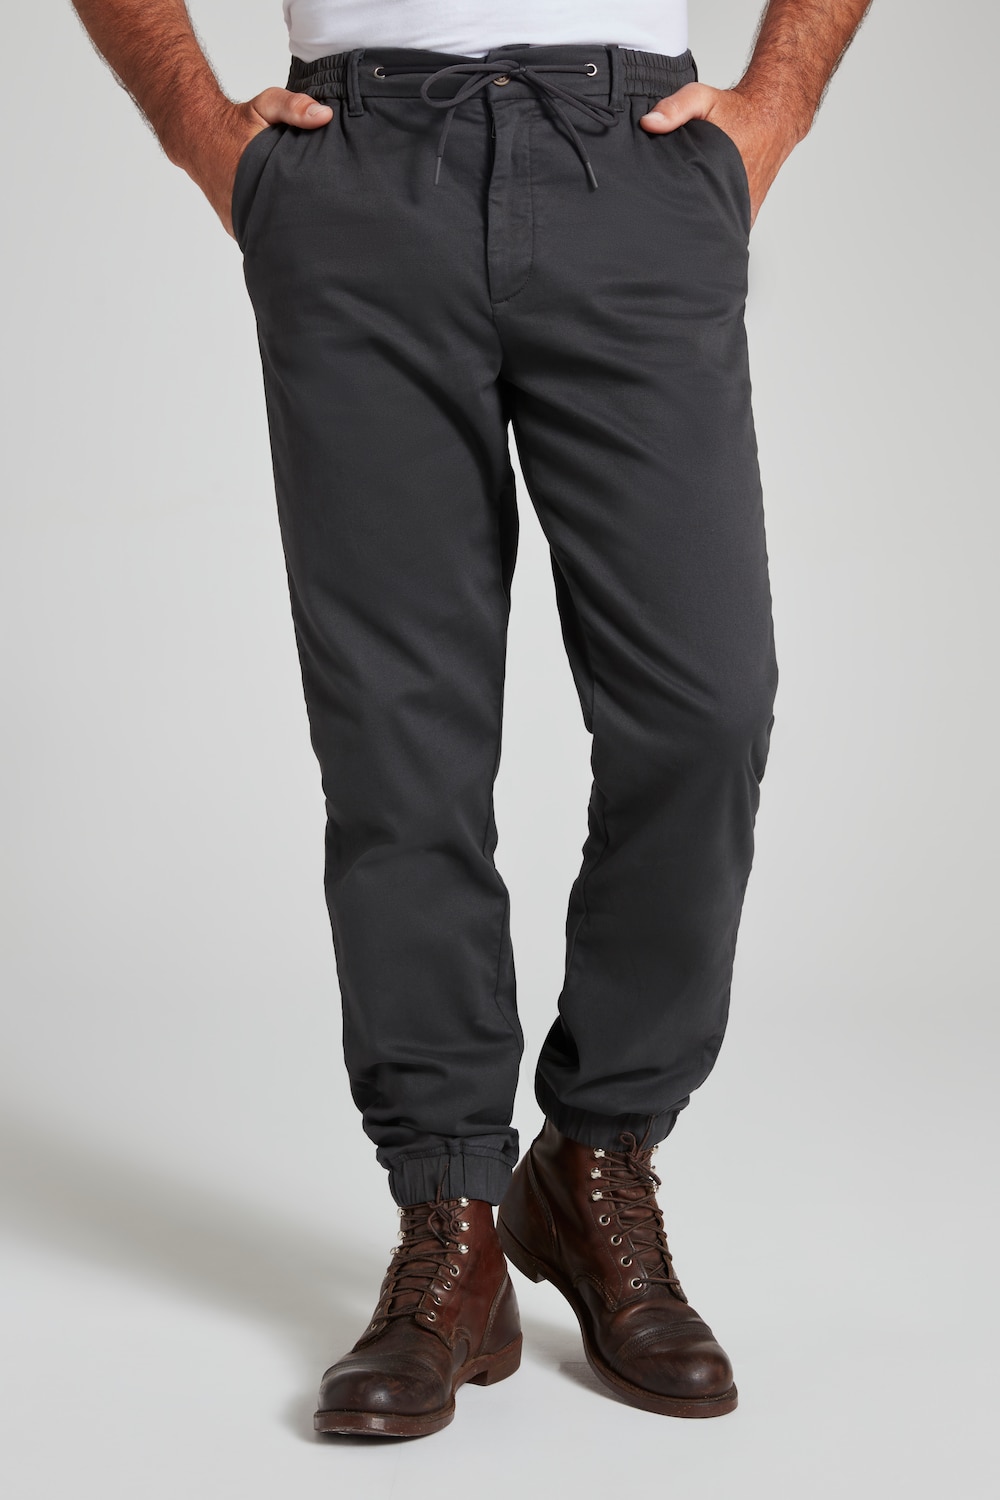 Plus Size Elastic Waistband Chino Pants FLEXNAMIC®, Man, green, size: 4XL, cotton, JP1880